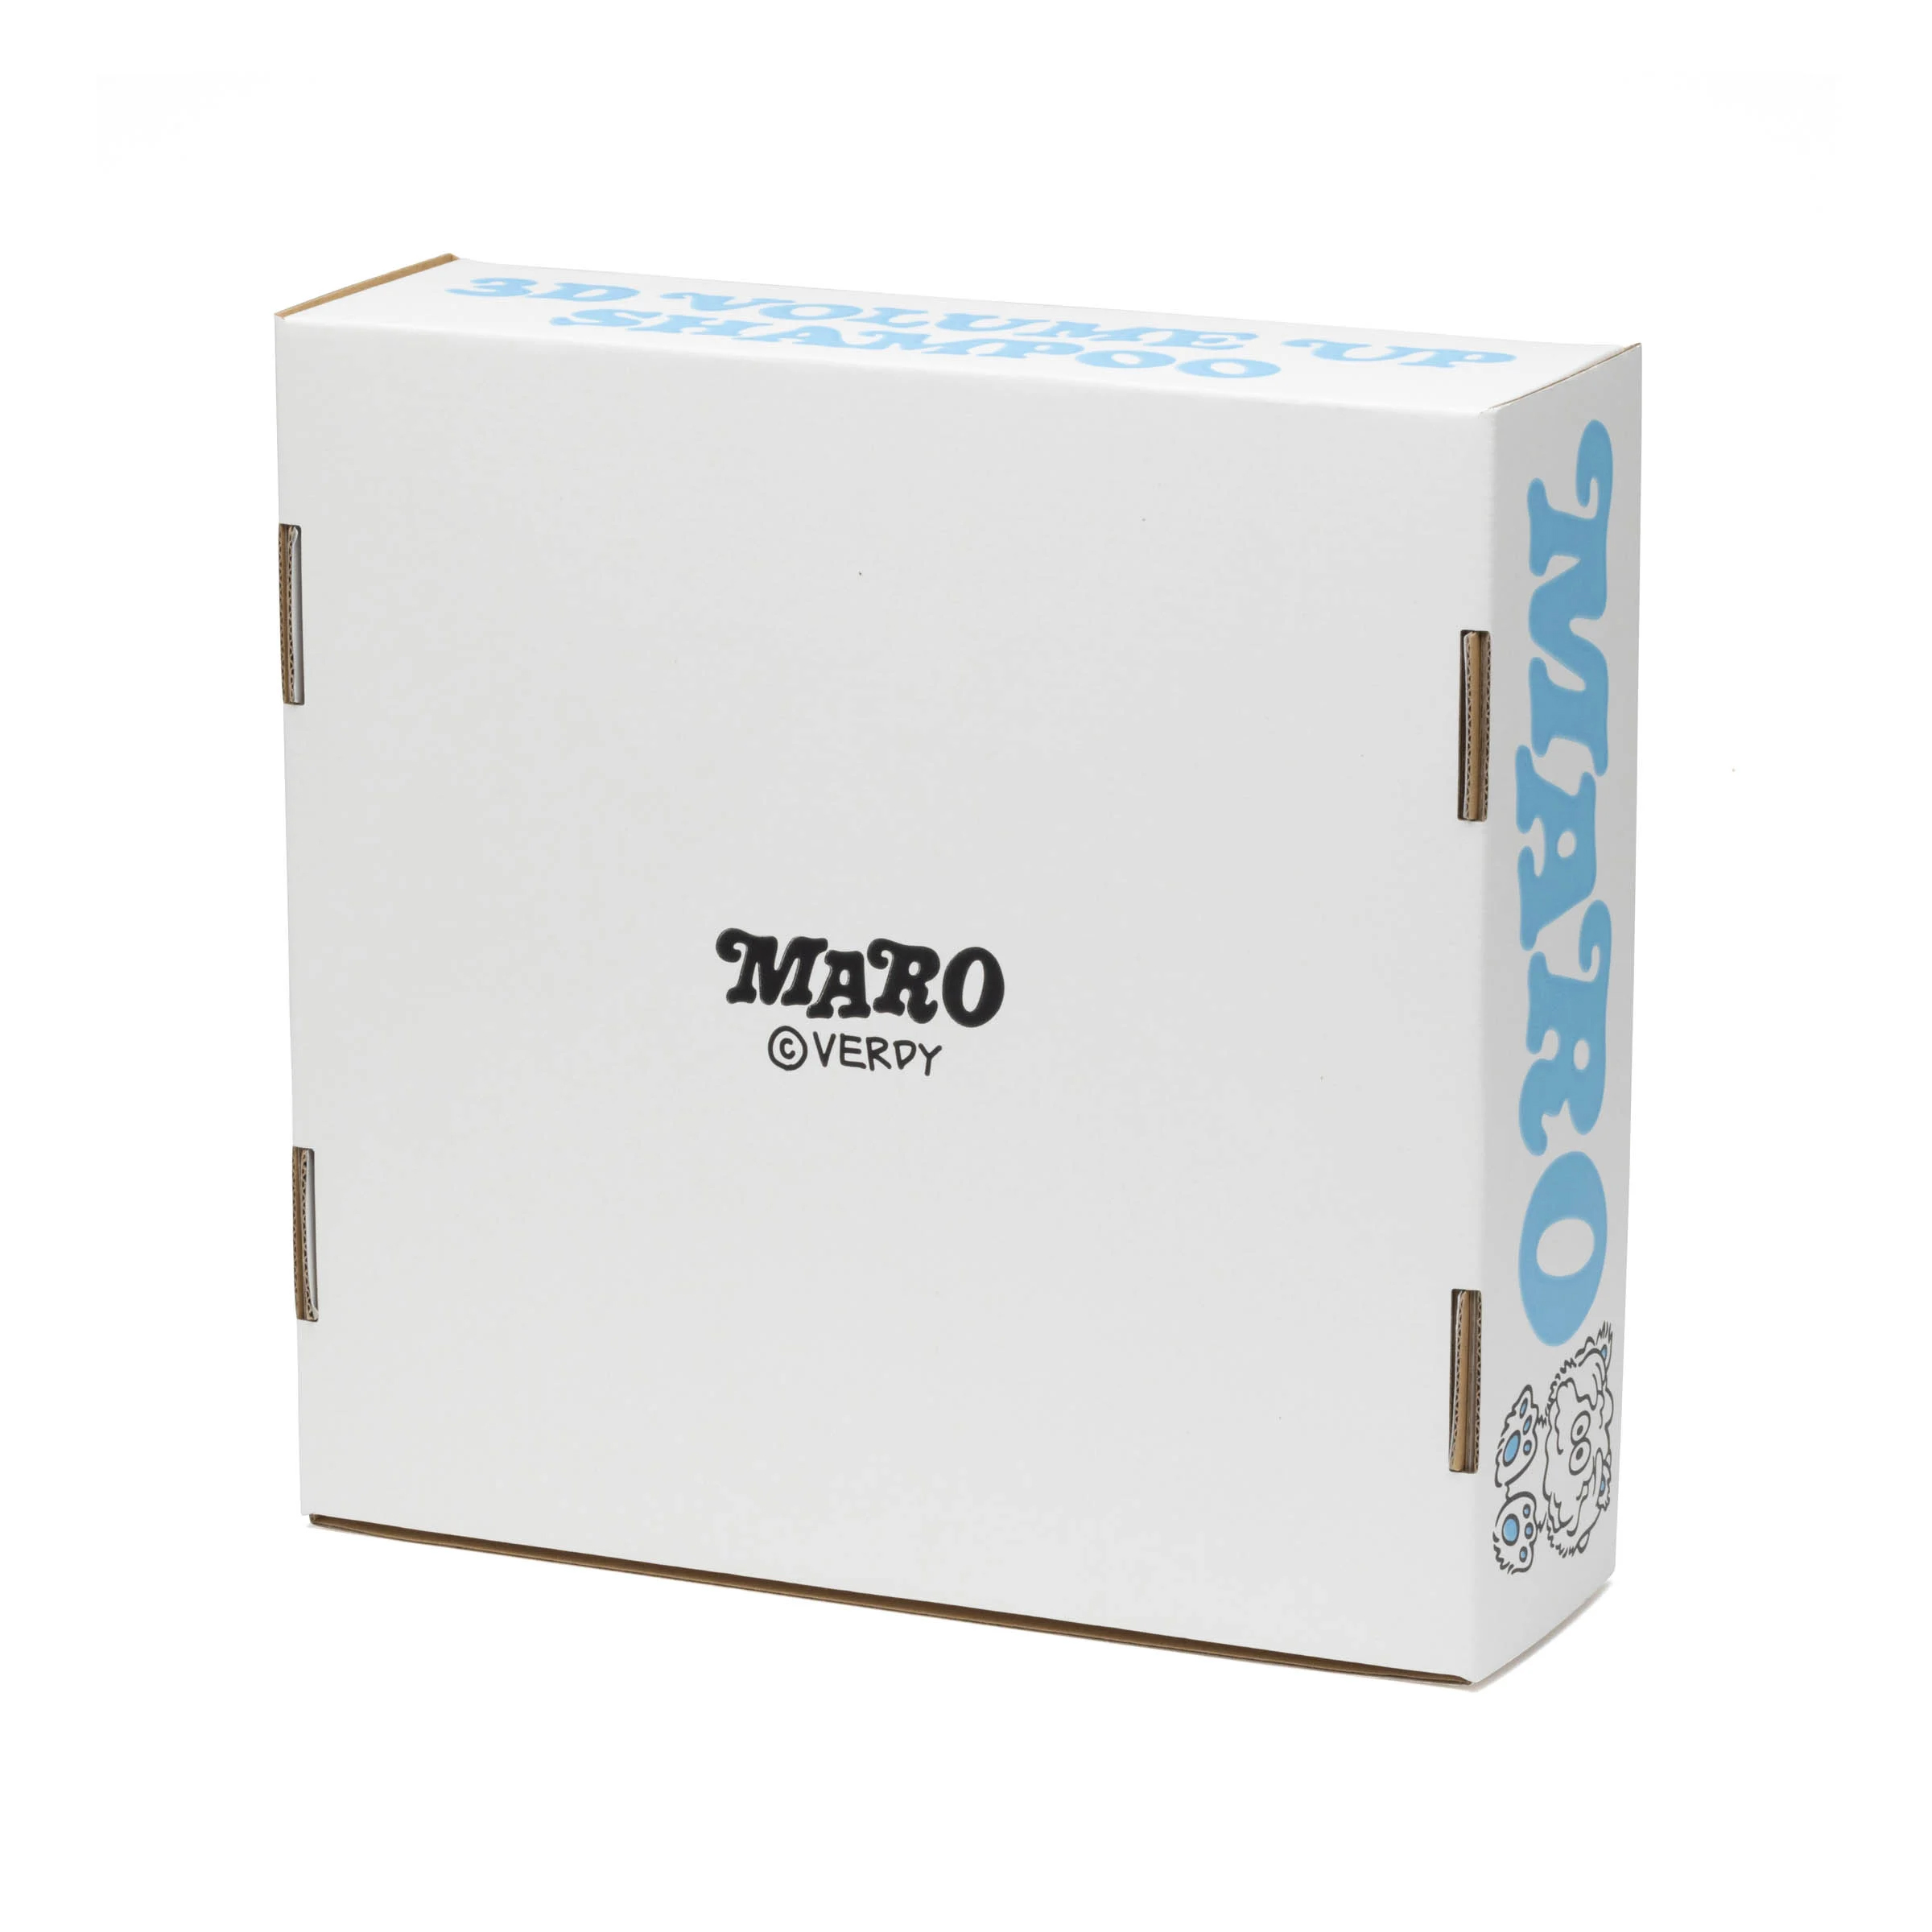 Verdy x MARO 限量版洗护礼盒发布– NOWRE现客